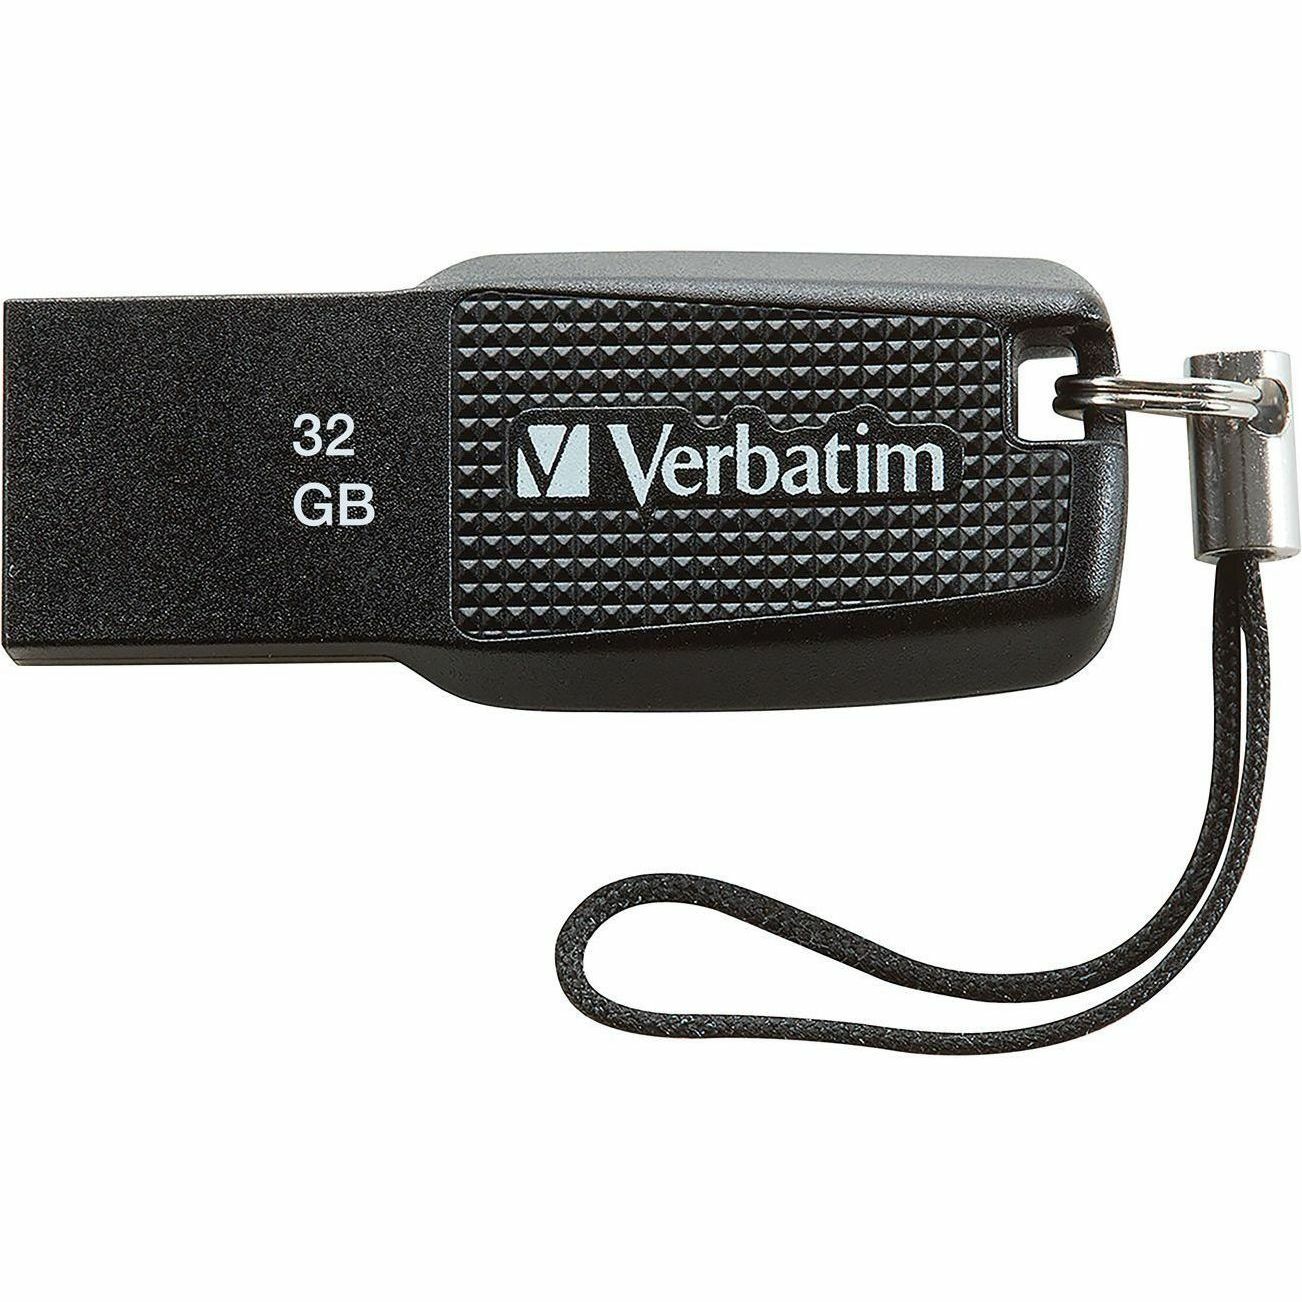 verbatim-32gb-ergo-usb-flash-drive-black-the-verbatim-ergo-usb-drive-features-an-ergonomic-design-for-in-hand-comfort-and-cob-design-for-enhanced-reliability_ver70876 - 3